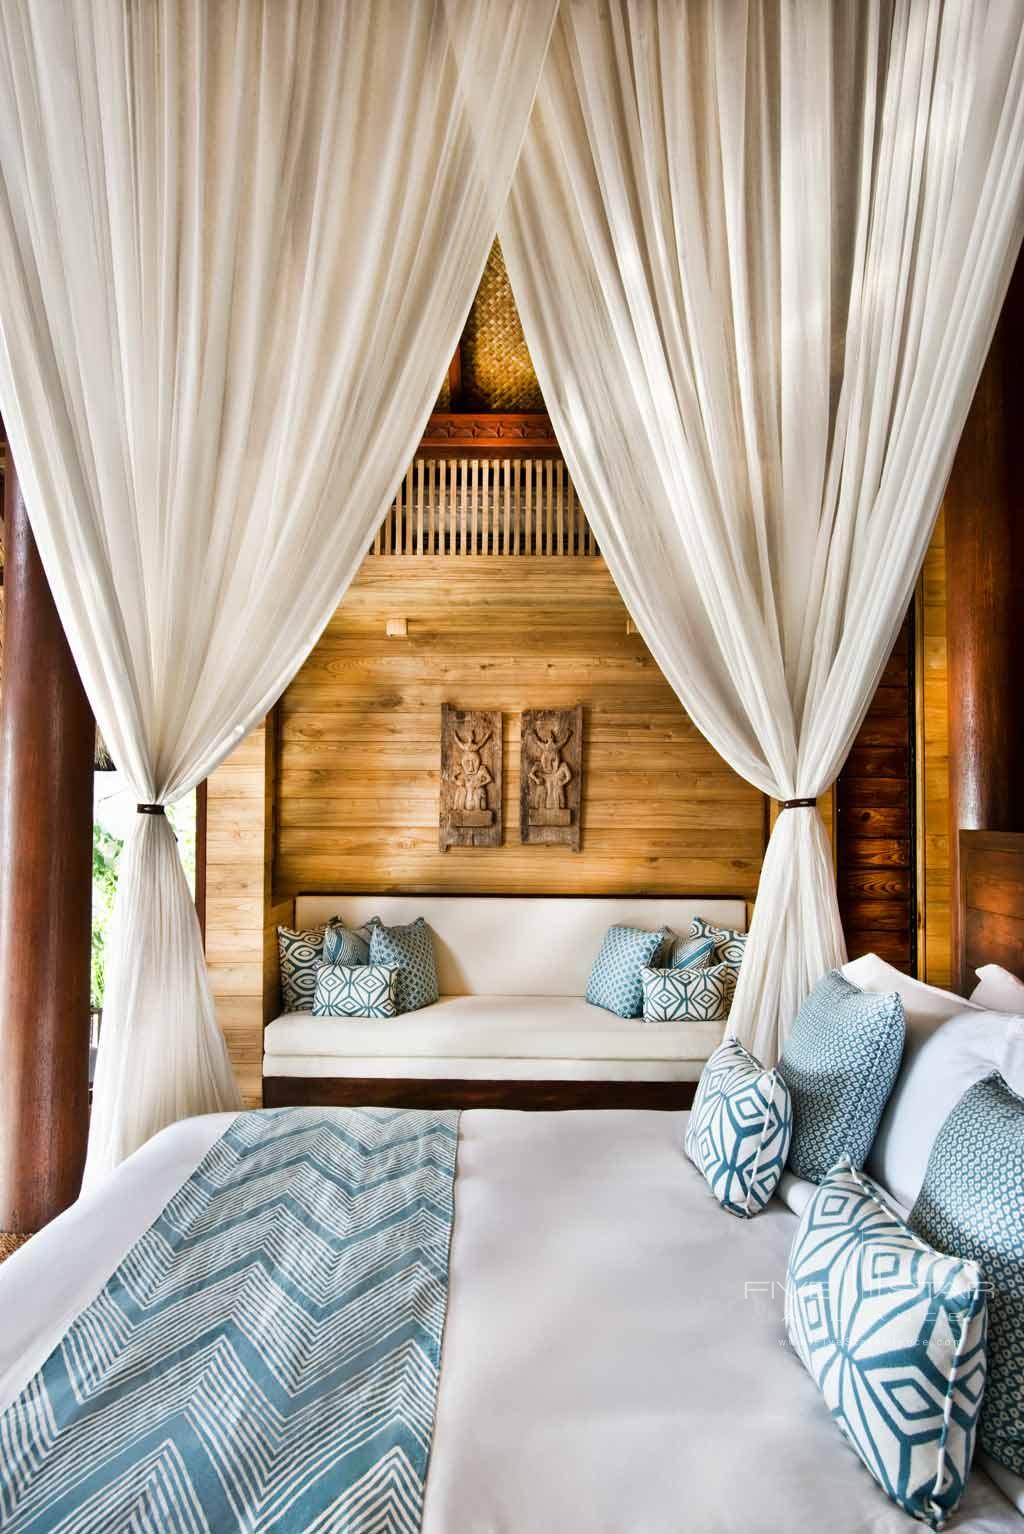 Marangge Bedroom at Nihi Sumba Island formerly Nihiwatu Resort, Sumba, Indonesia